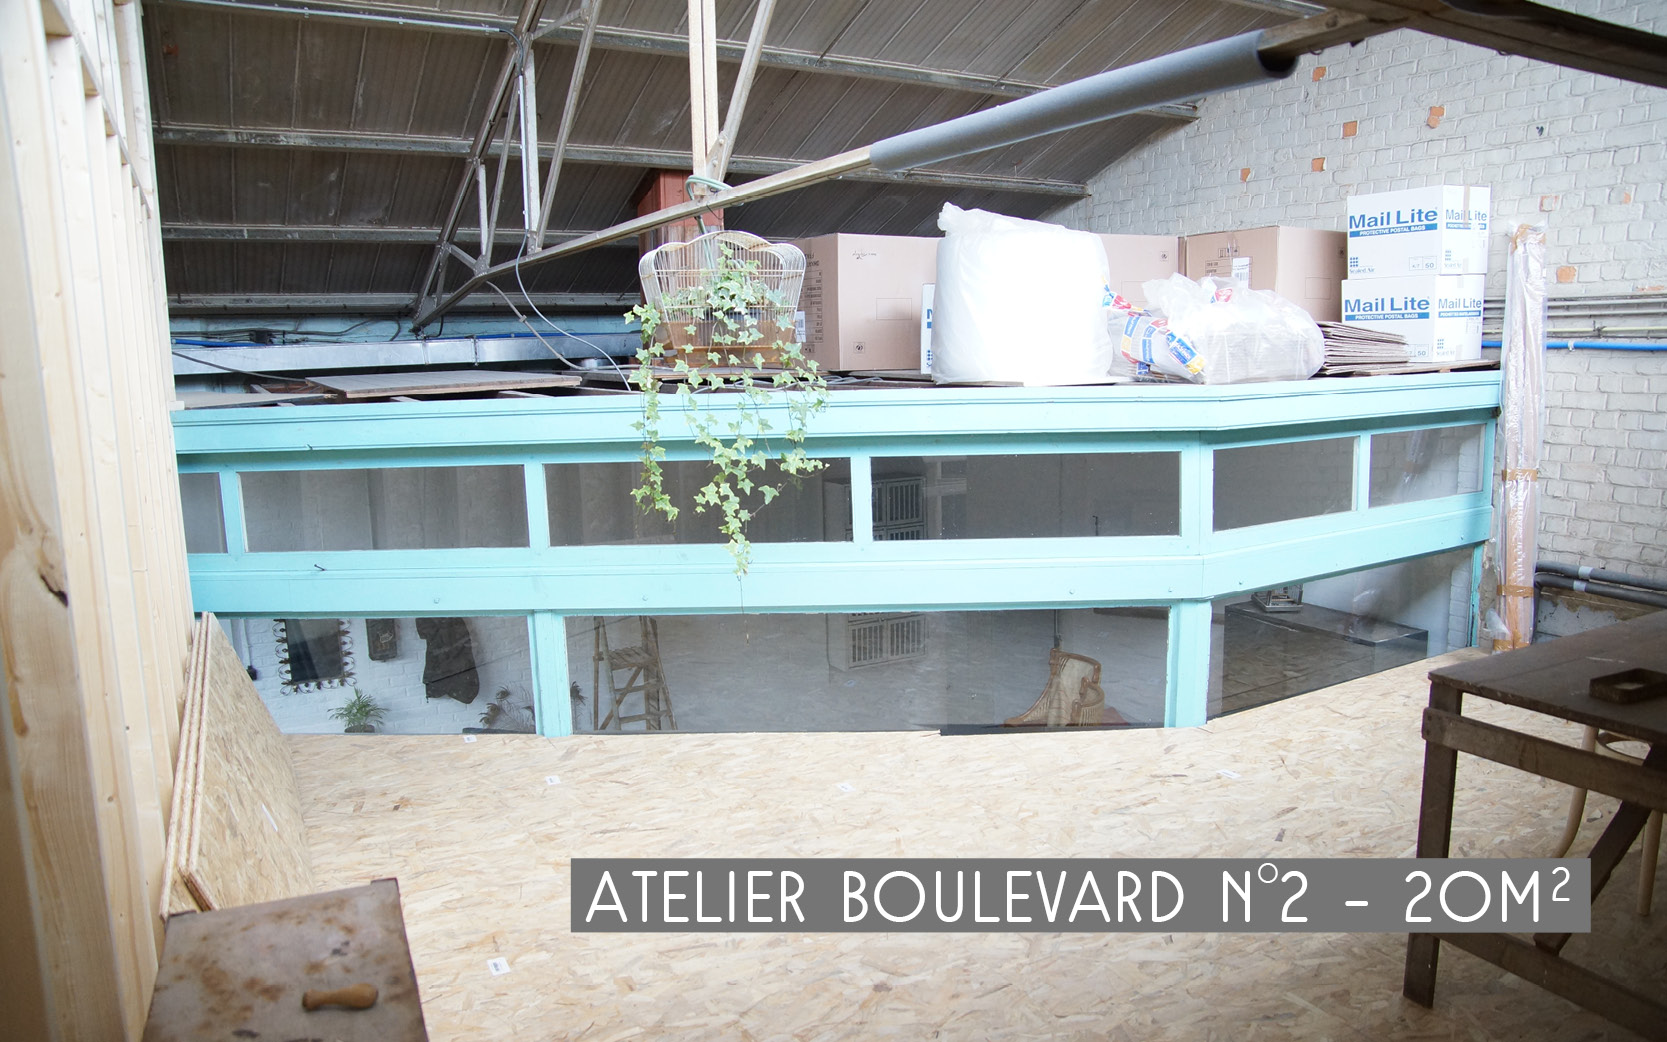 Atelier Boulevard 20m2 2